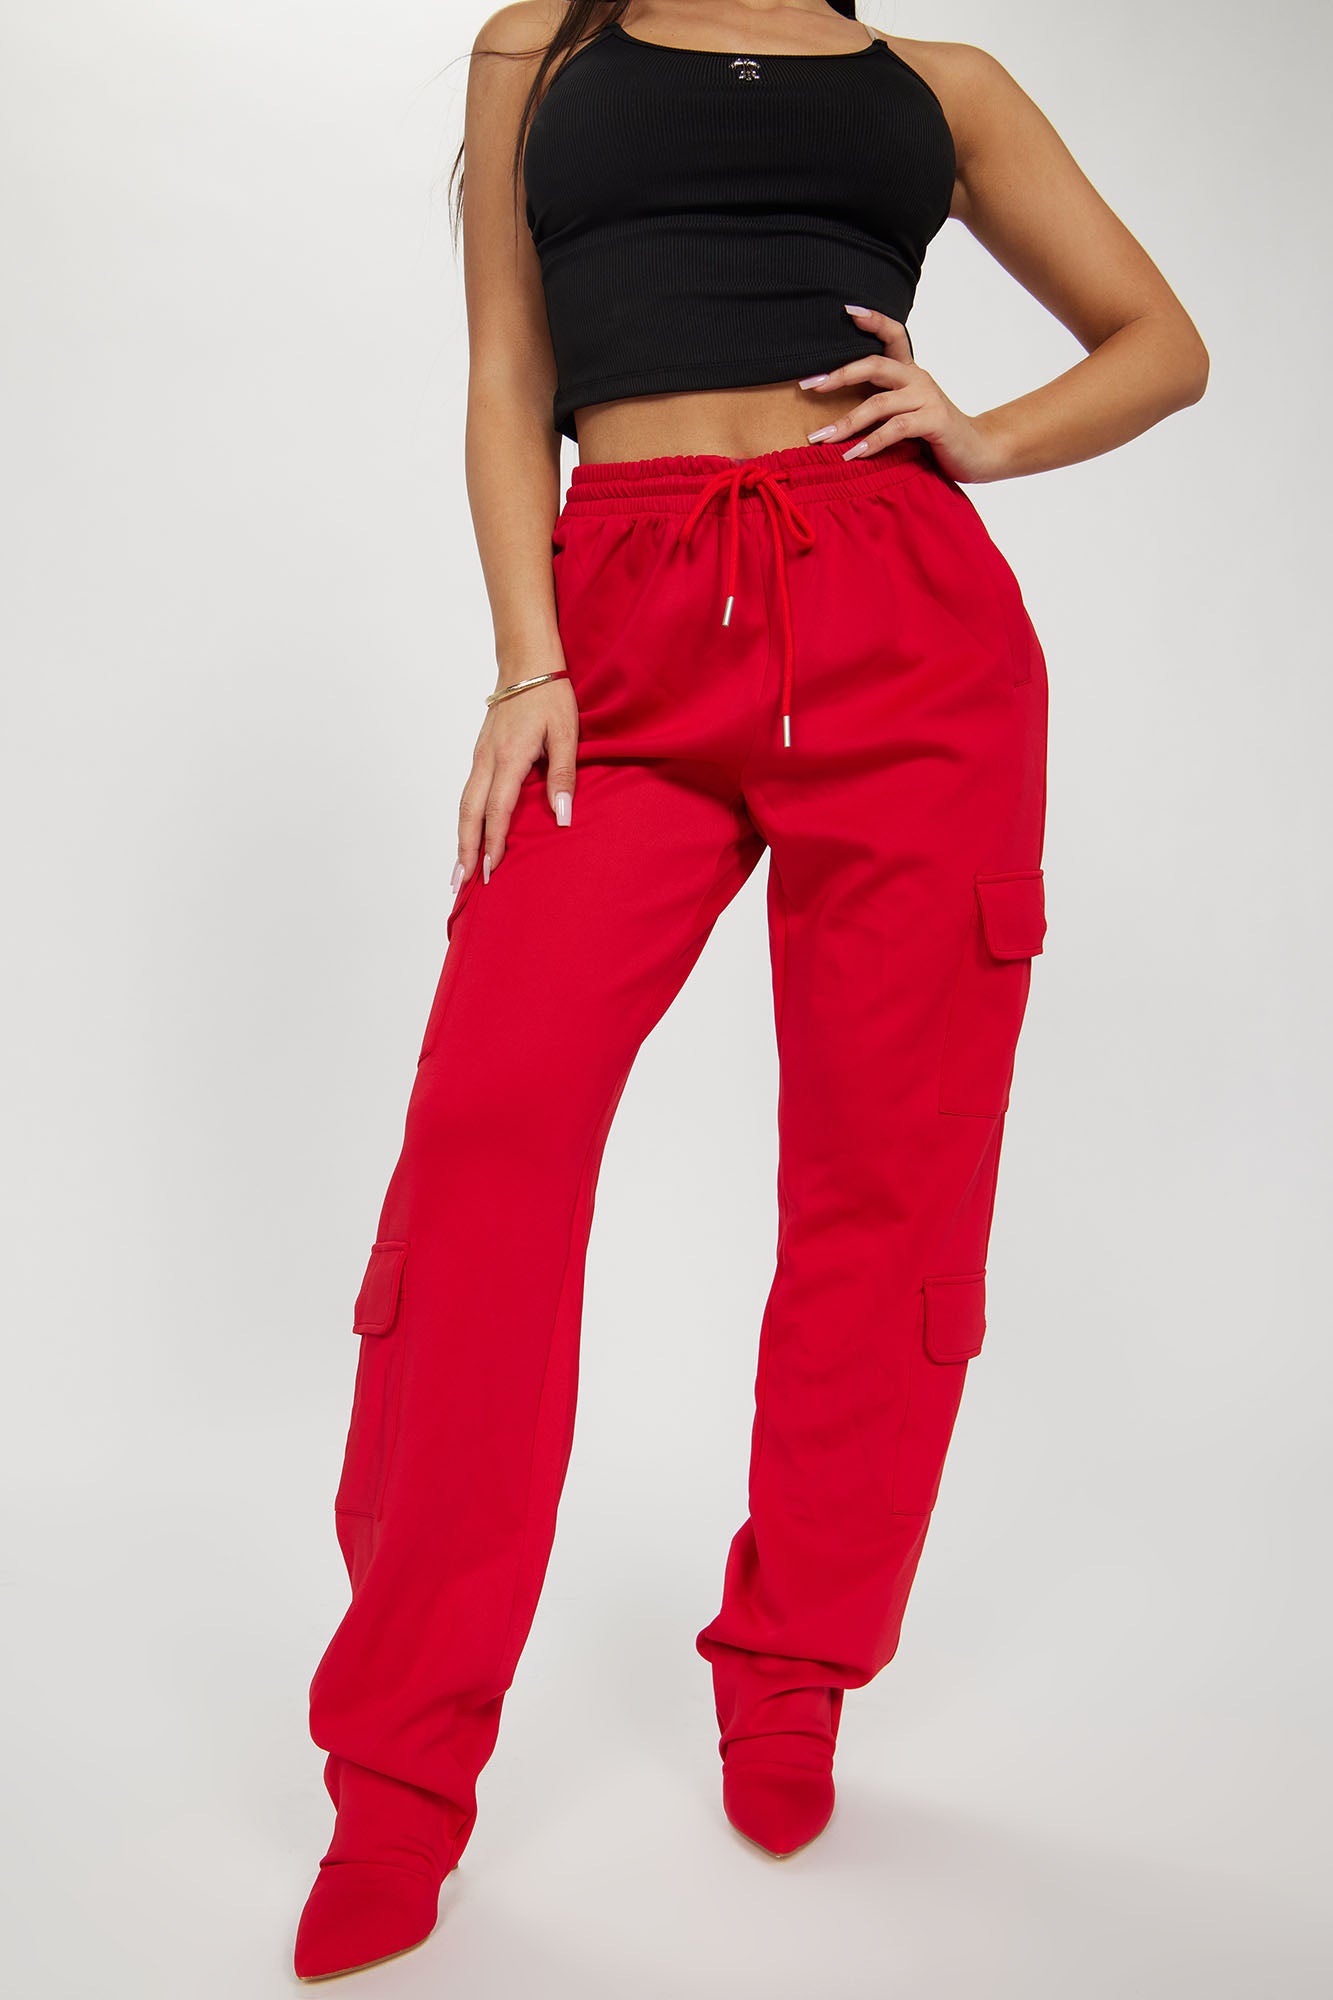 Roxy Pant Boots - Red, Fashion Nova, Shoes